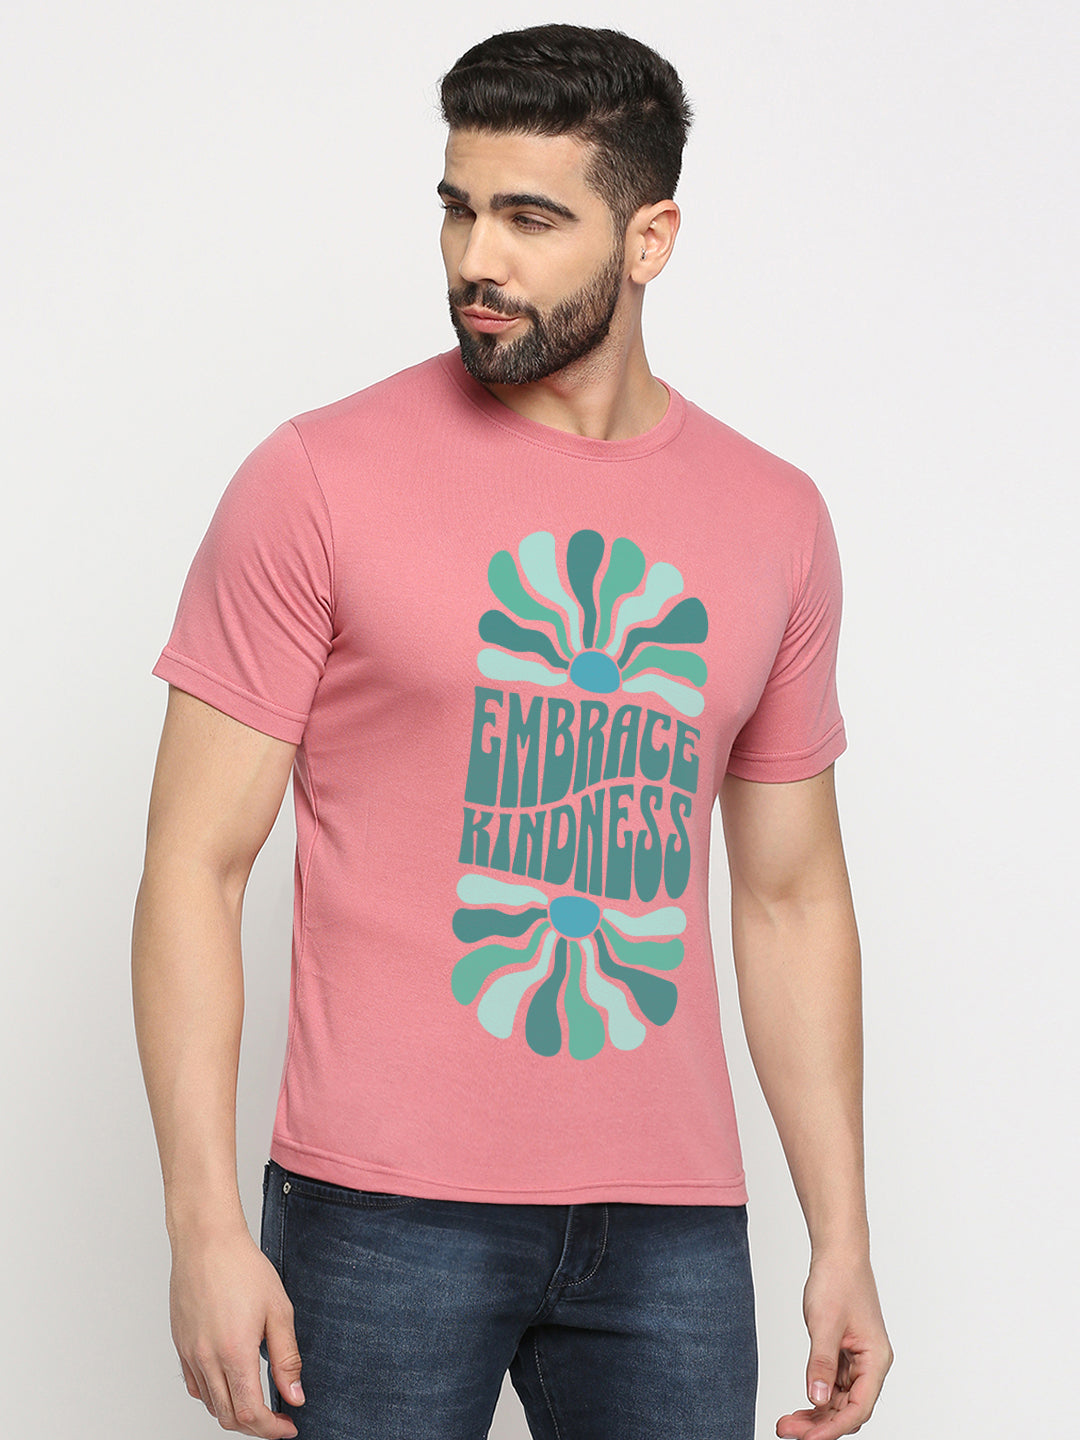 Embrace Kindness T-Shirt